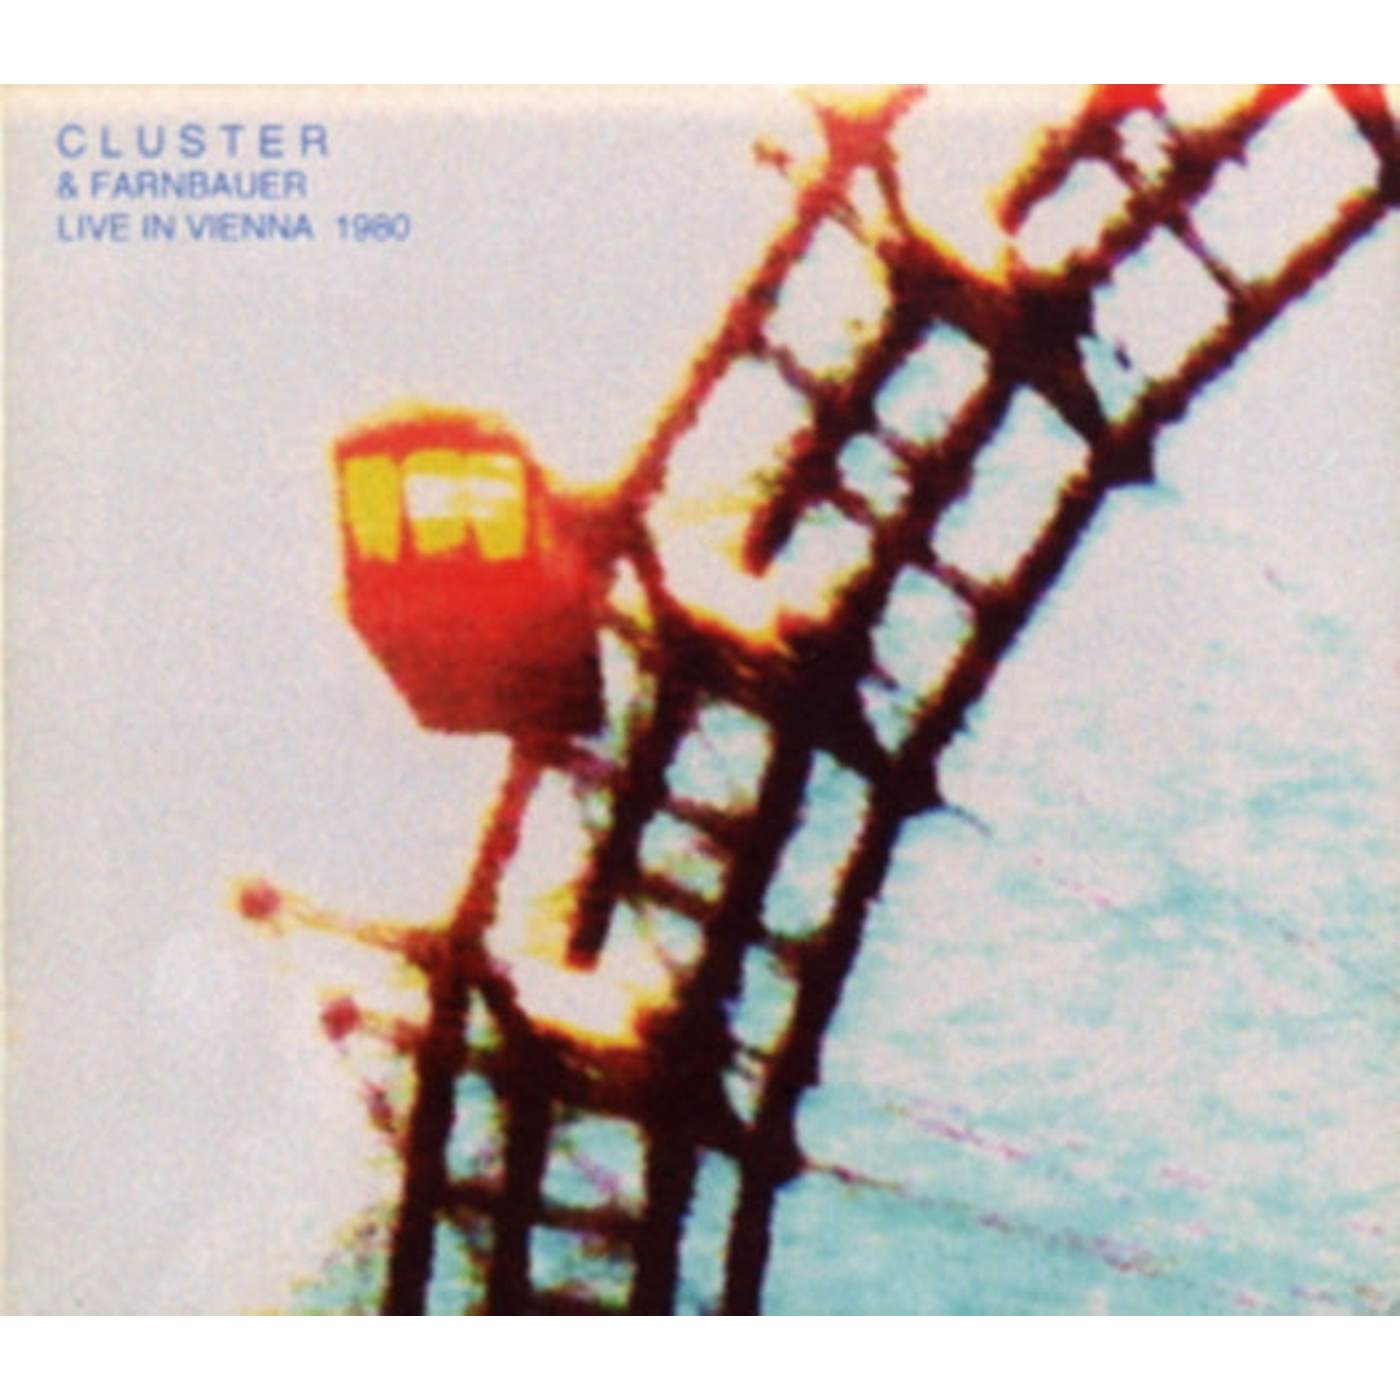 Cluster LP - Cluster & Farnbauer Live In Vi (Vinyl)